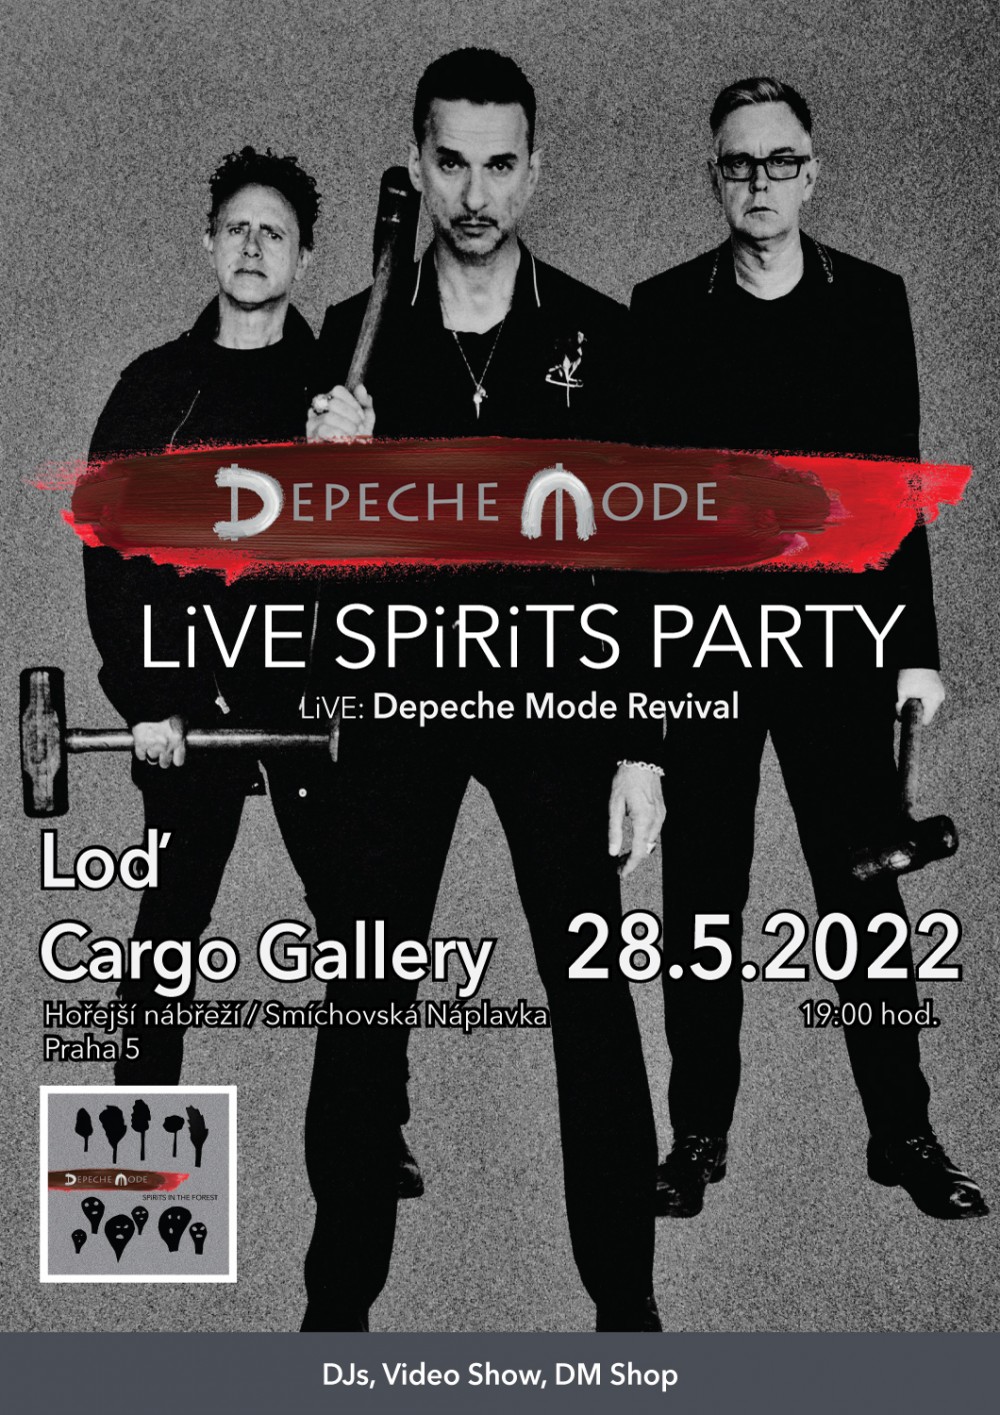 Praha 5: Depeche Mode LiVE SPiRiTS Party